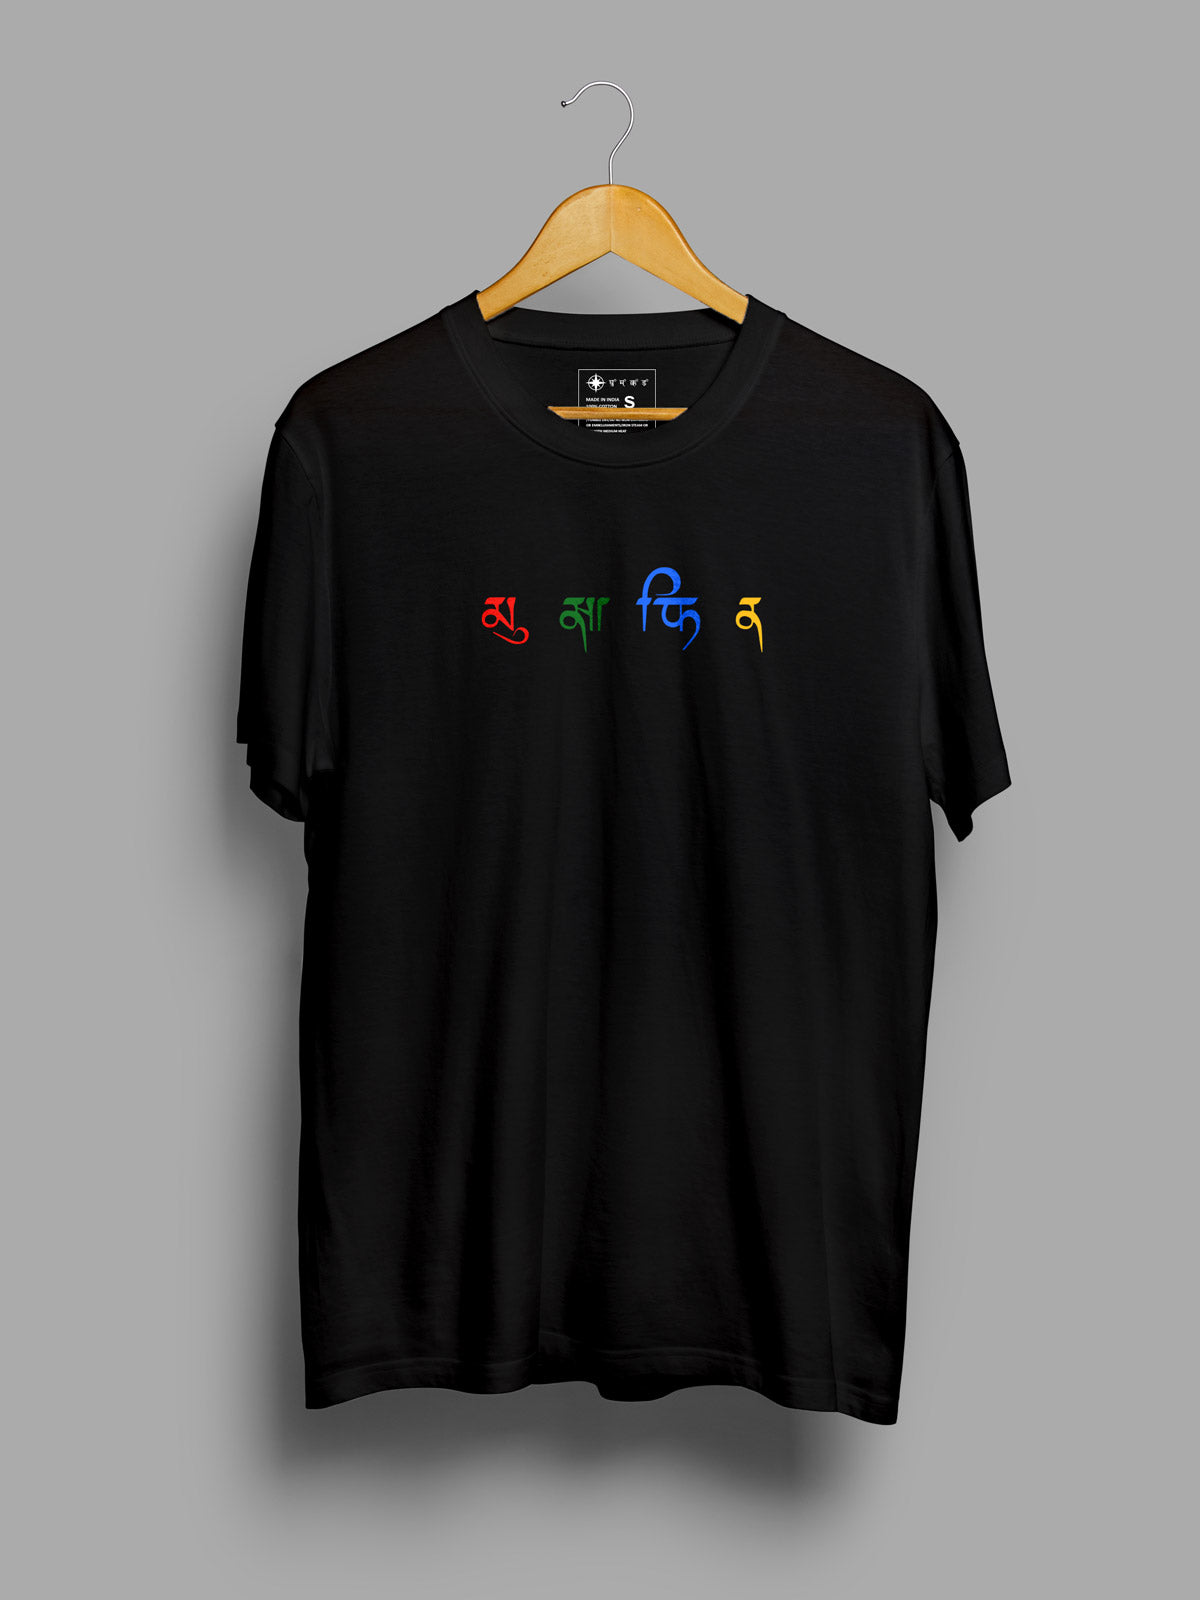 Musafir-printed-t-shirt-for-men by Ghumakkad